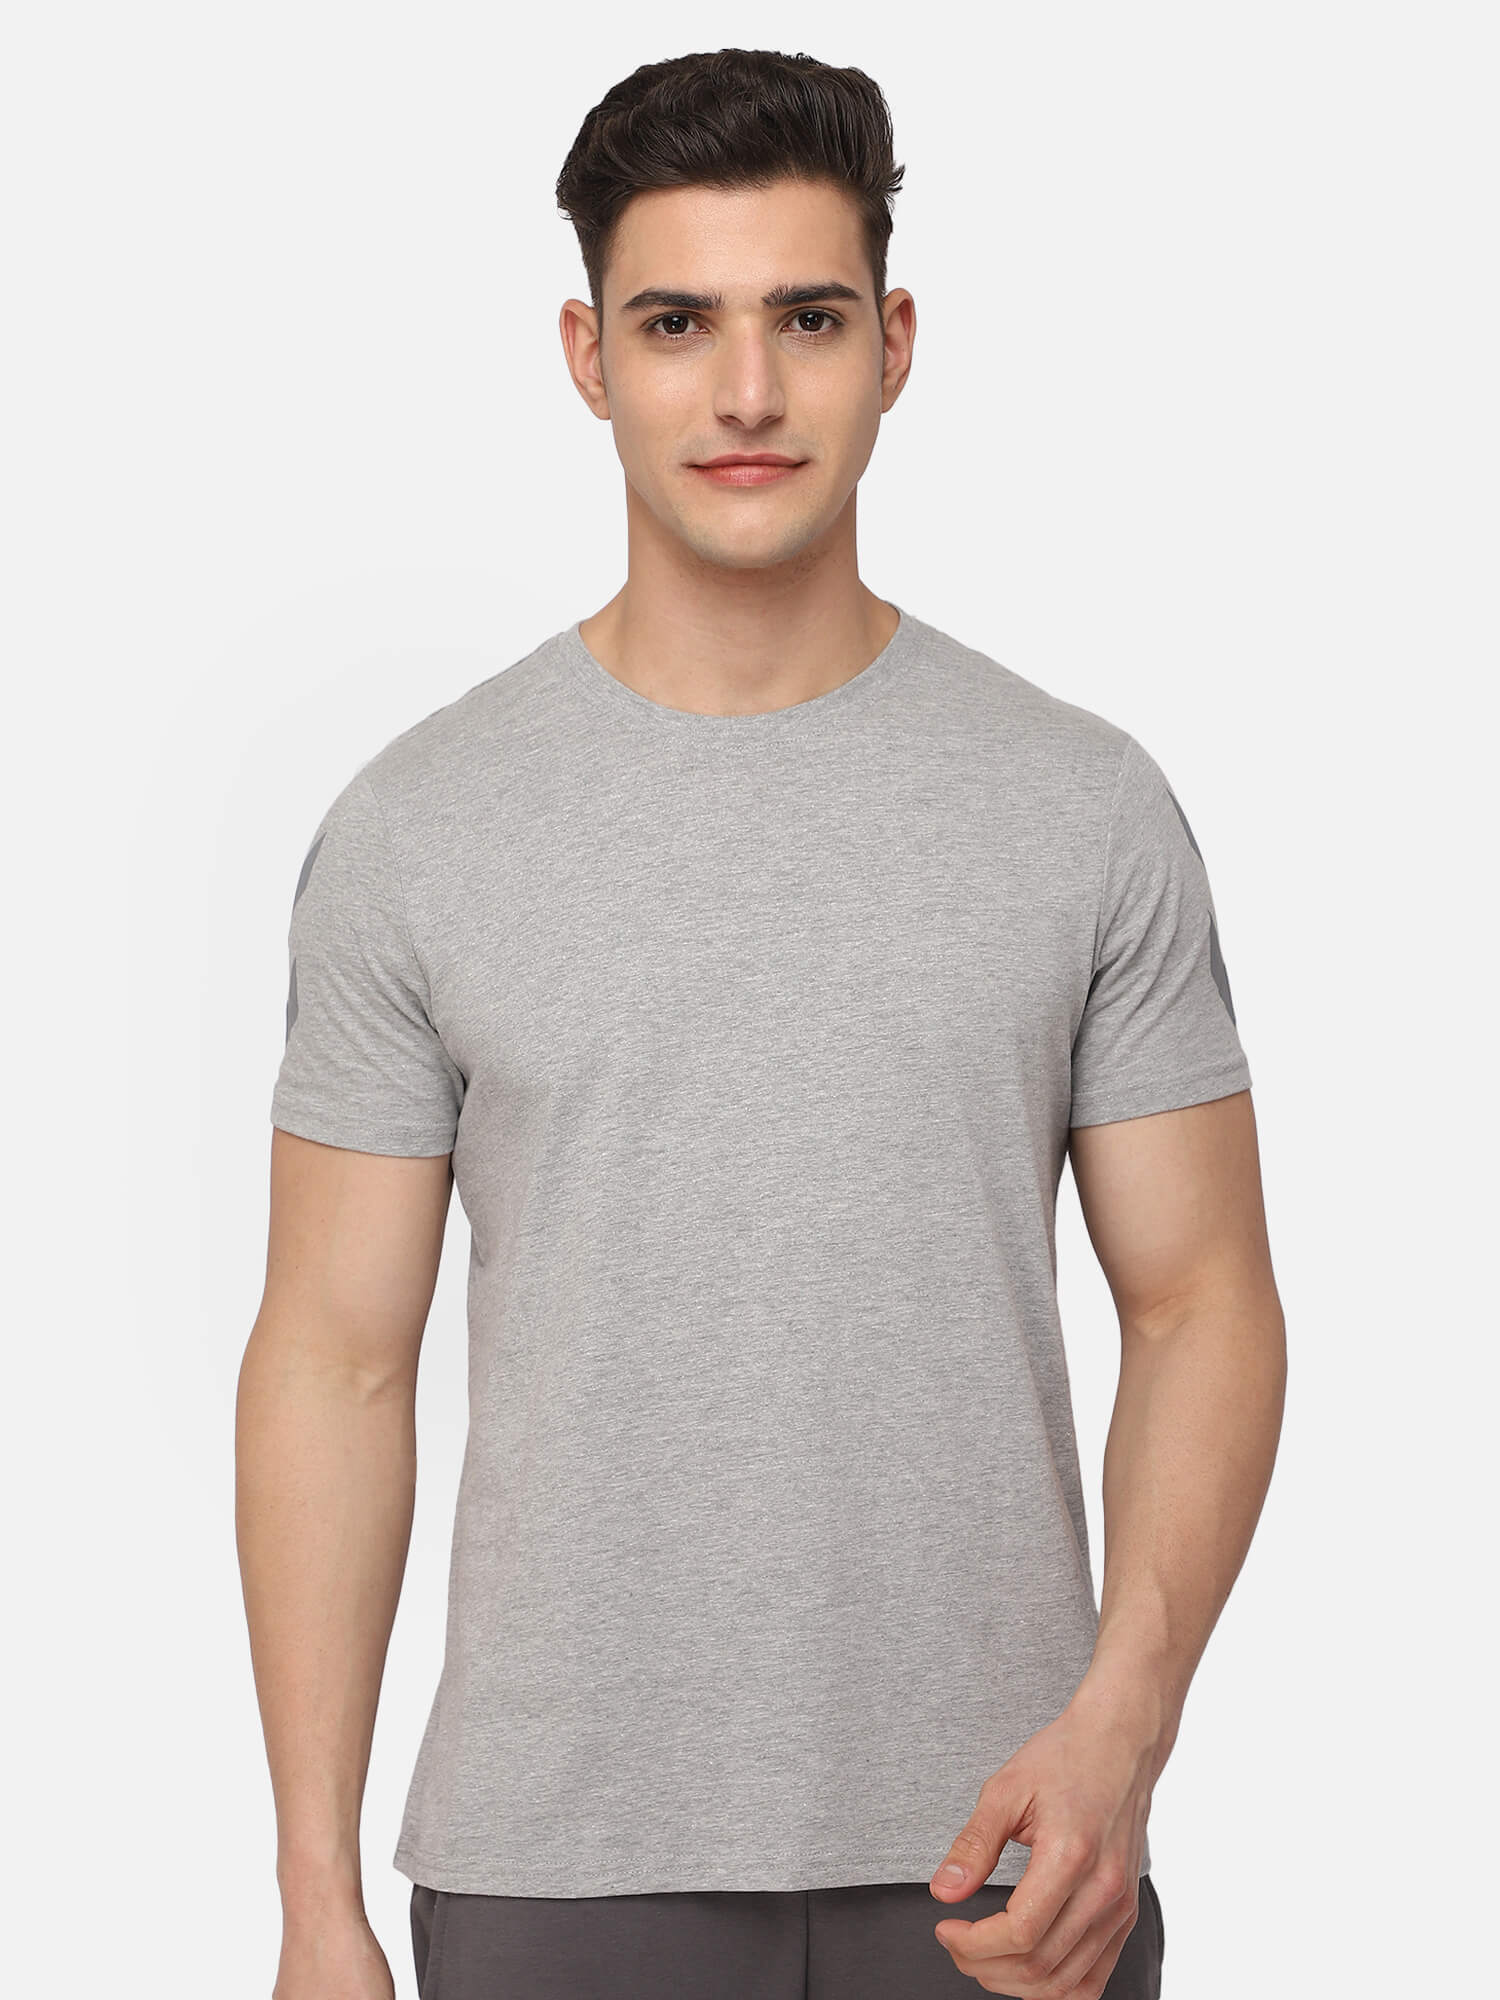 Legacy Chevron Grey T-Shirts for Men